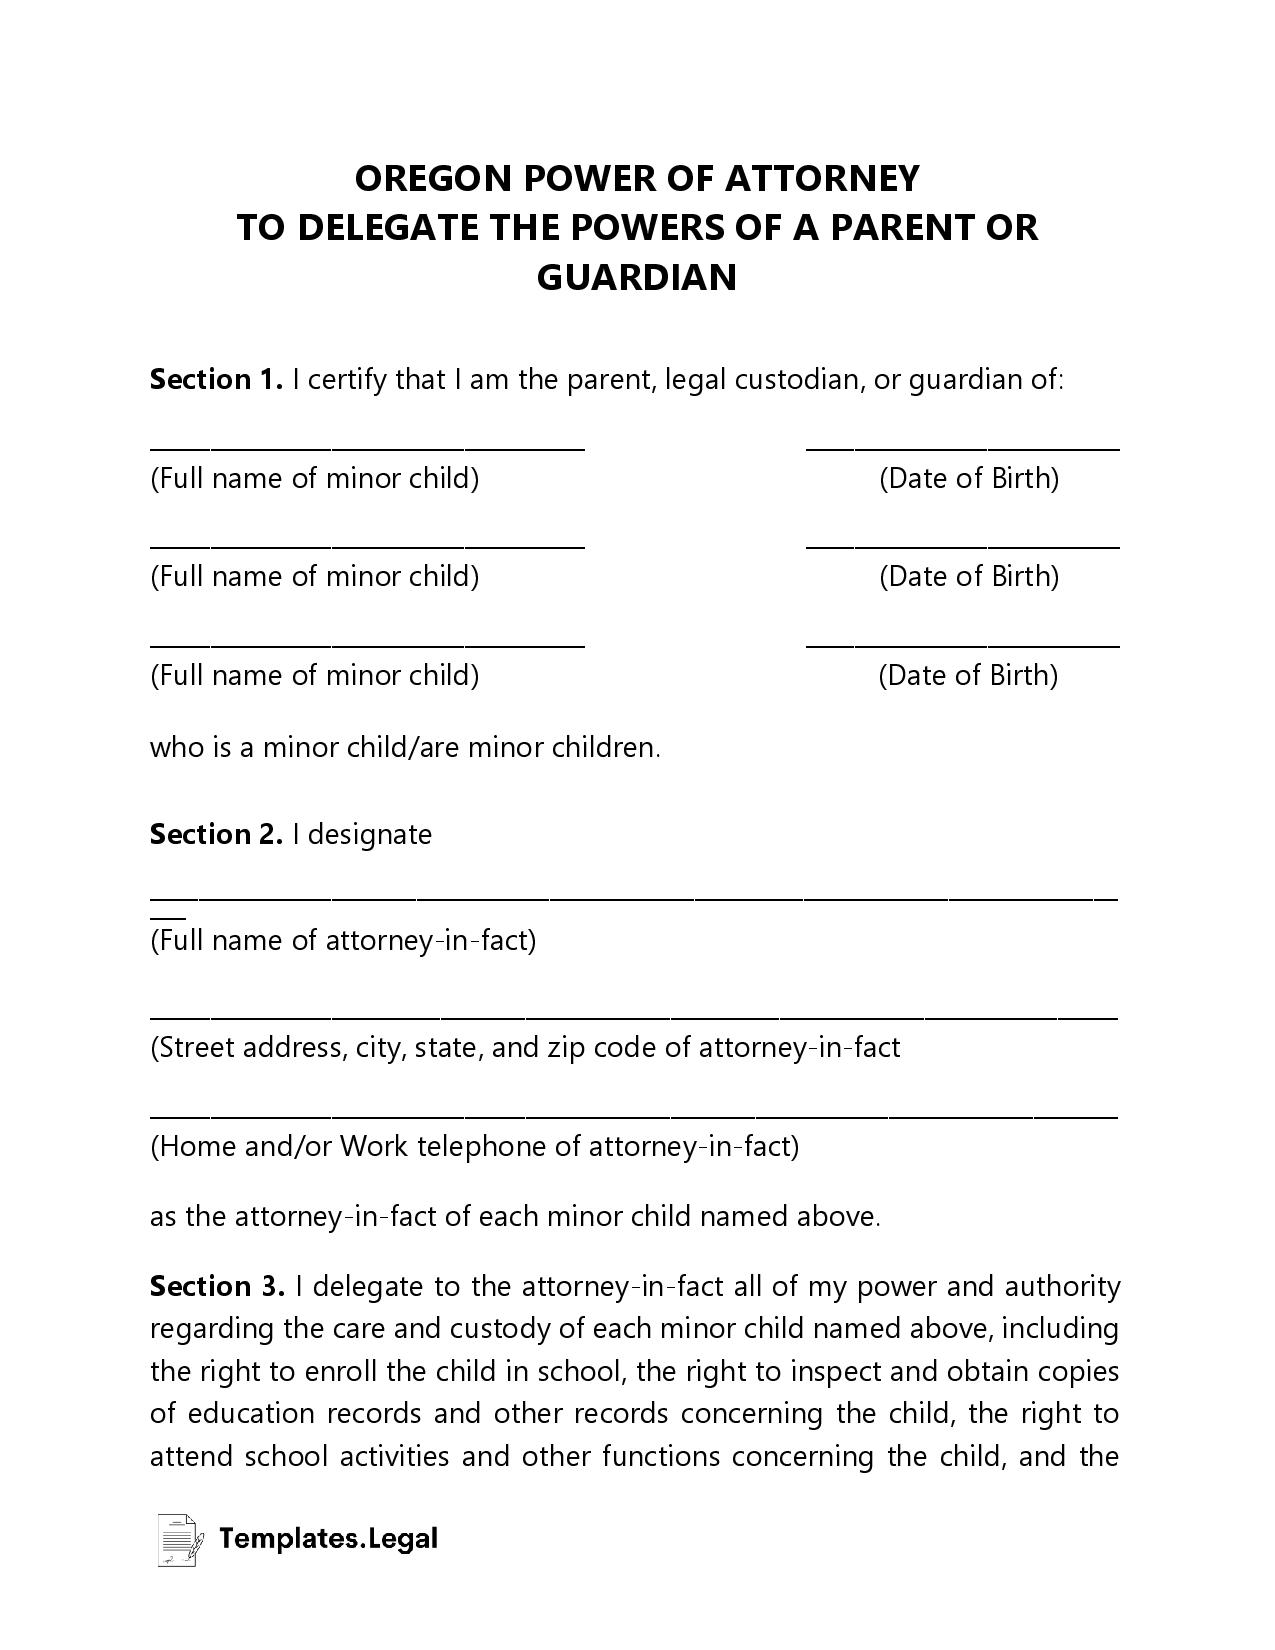 Oregon Minor (Child) Power of Attorney - Templates.Legal